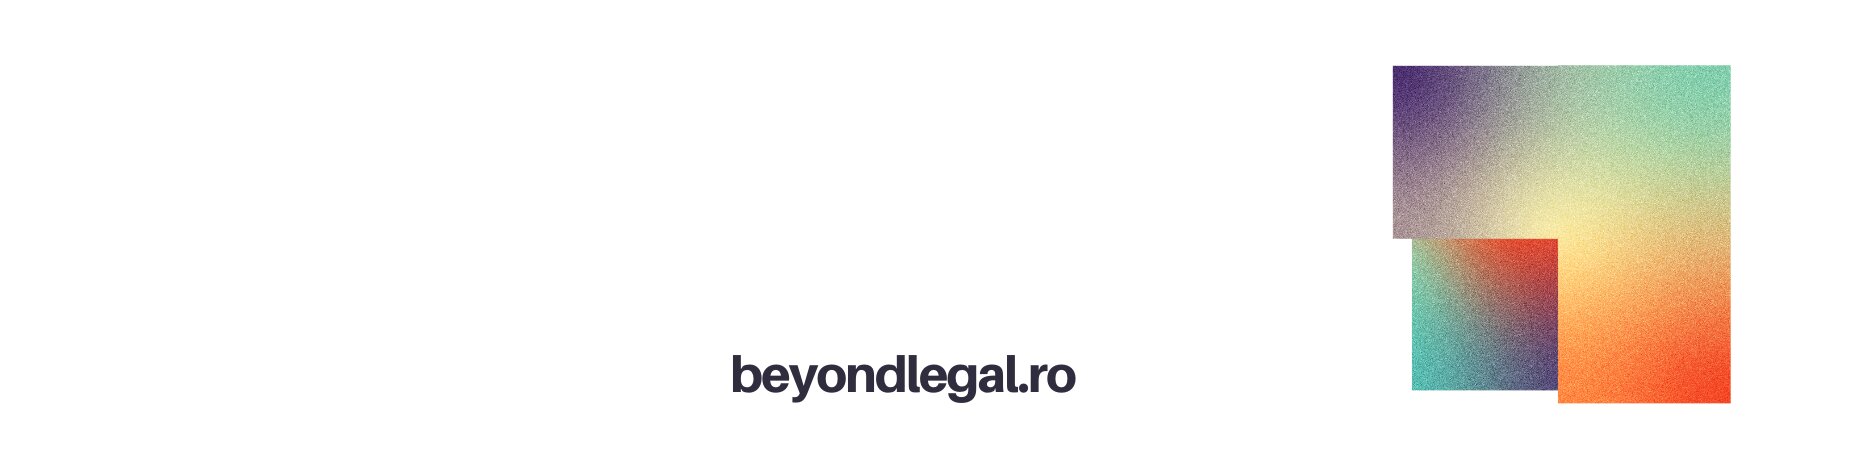 beyondlegal.ro | laurențiu-paul pop cover photo